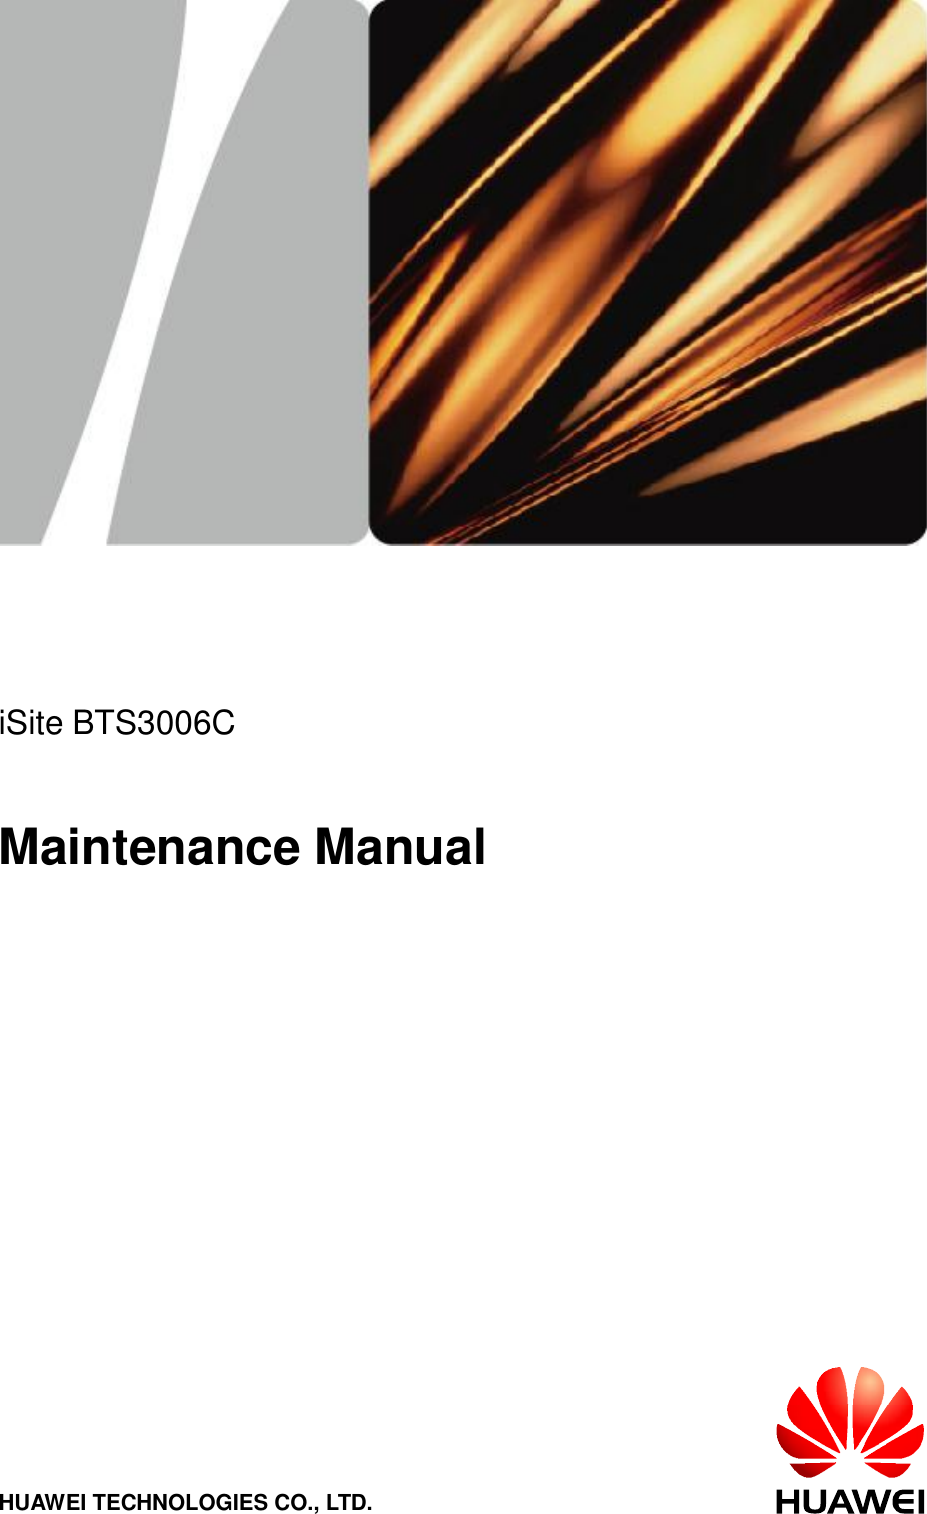 iSite BTS3006C     Maintenance Manual  HUAWEI TECHNOLOGIES CO., LTD.   